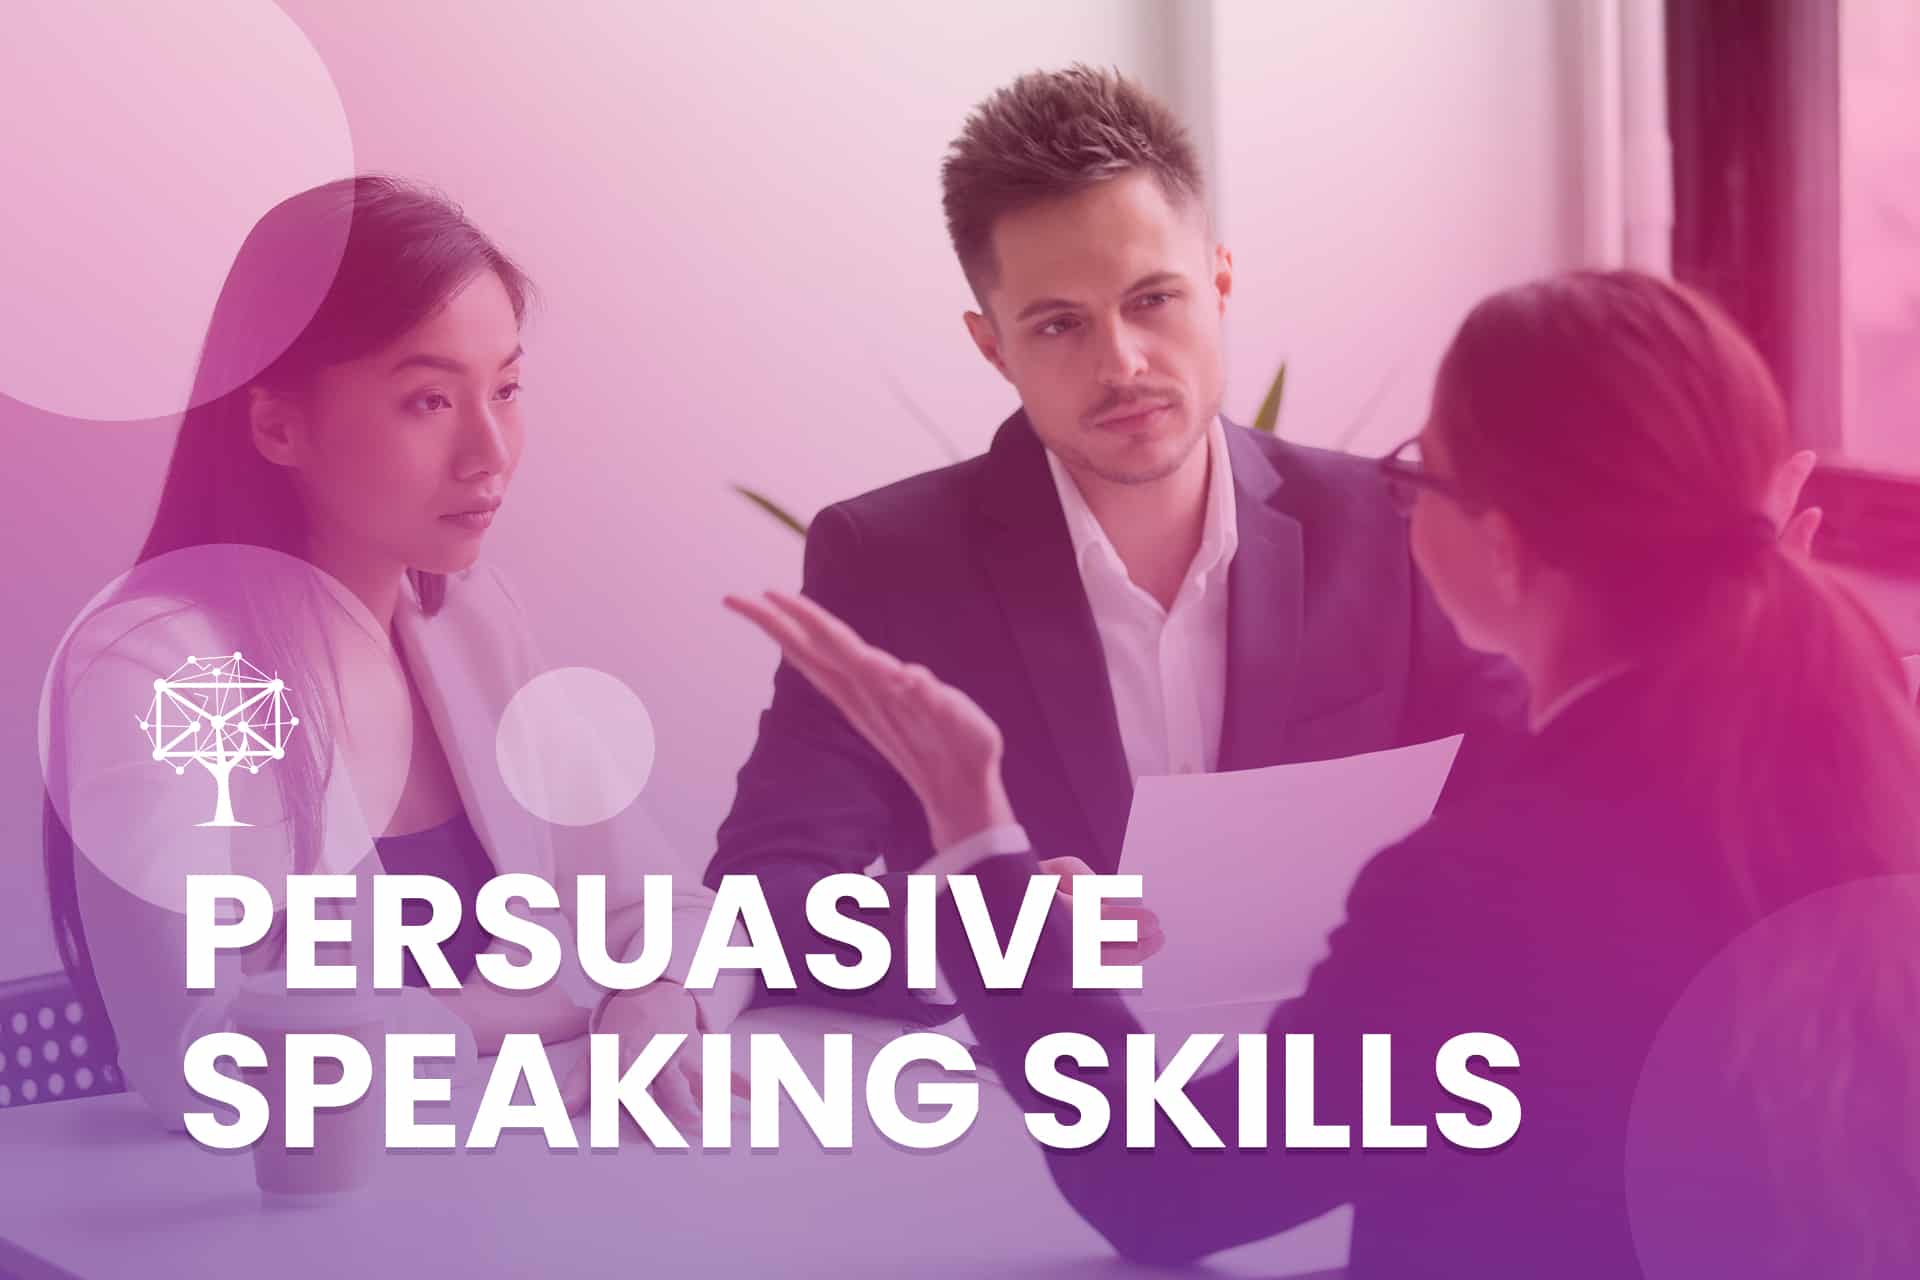 Persuasive Speaking Skills for customer service